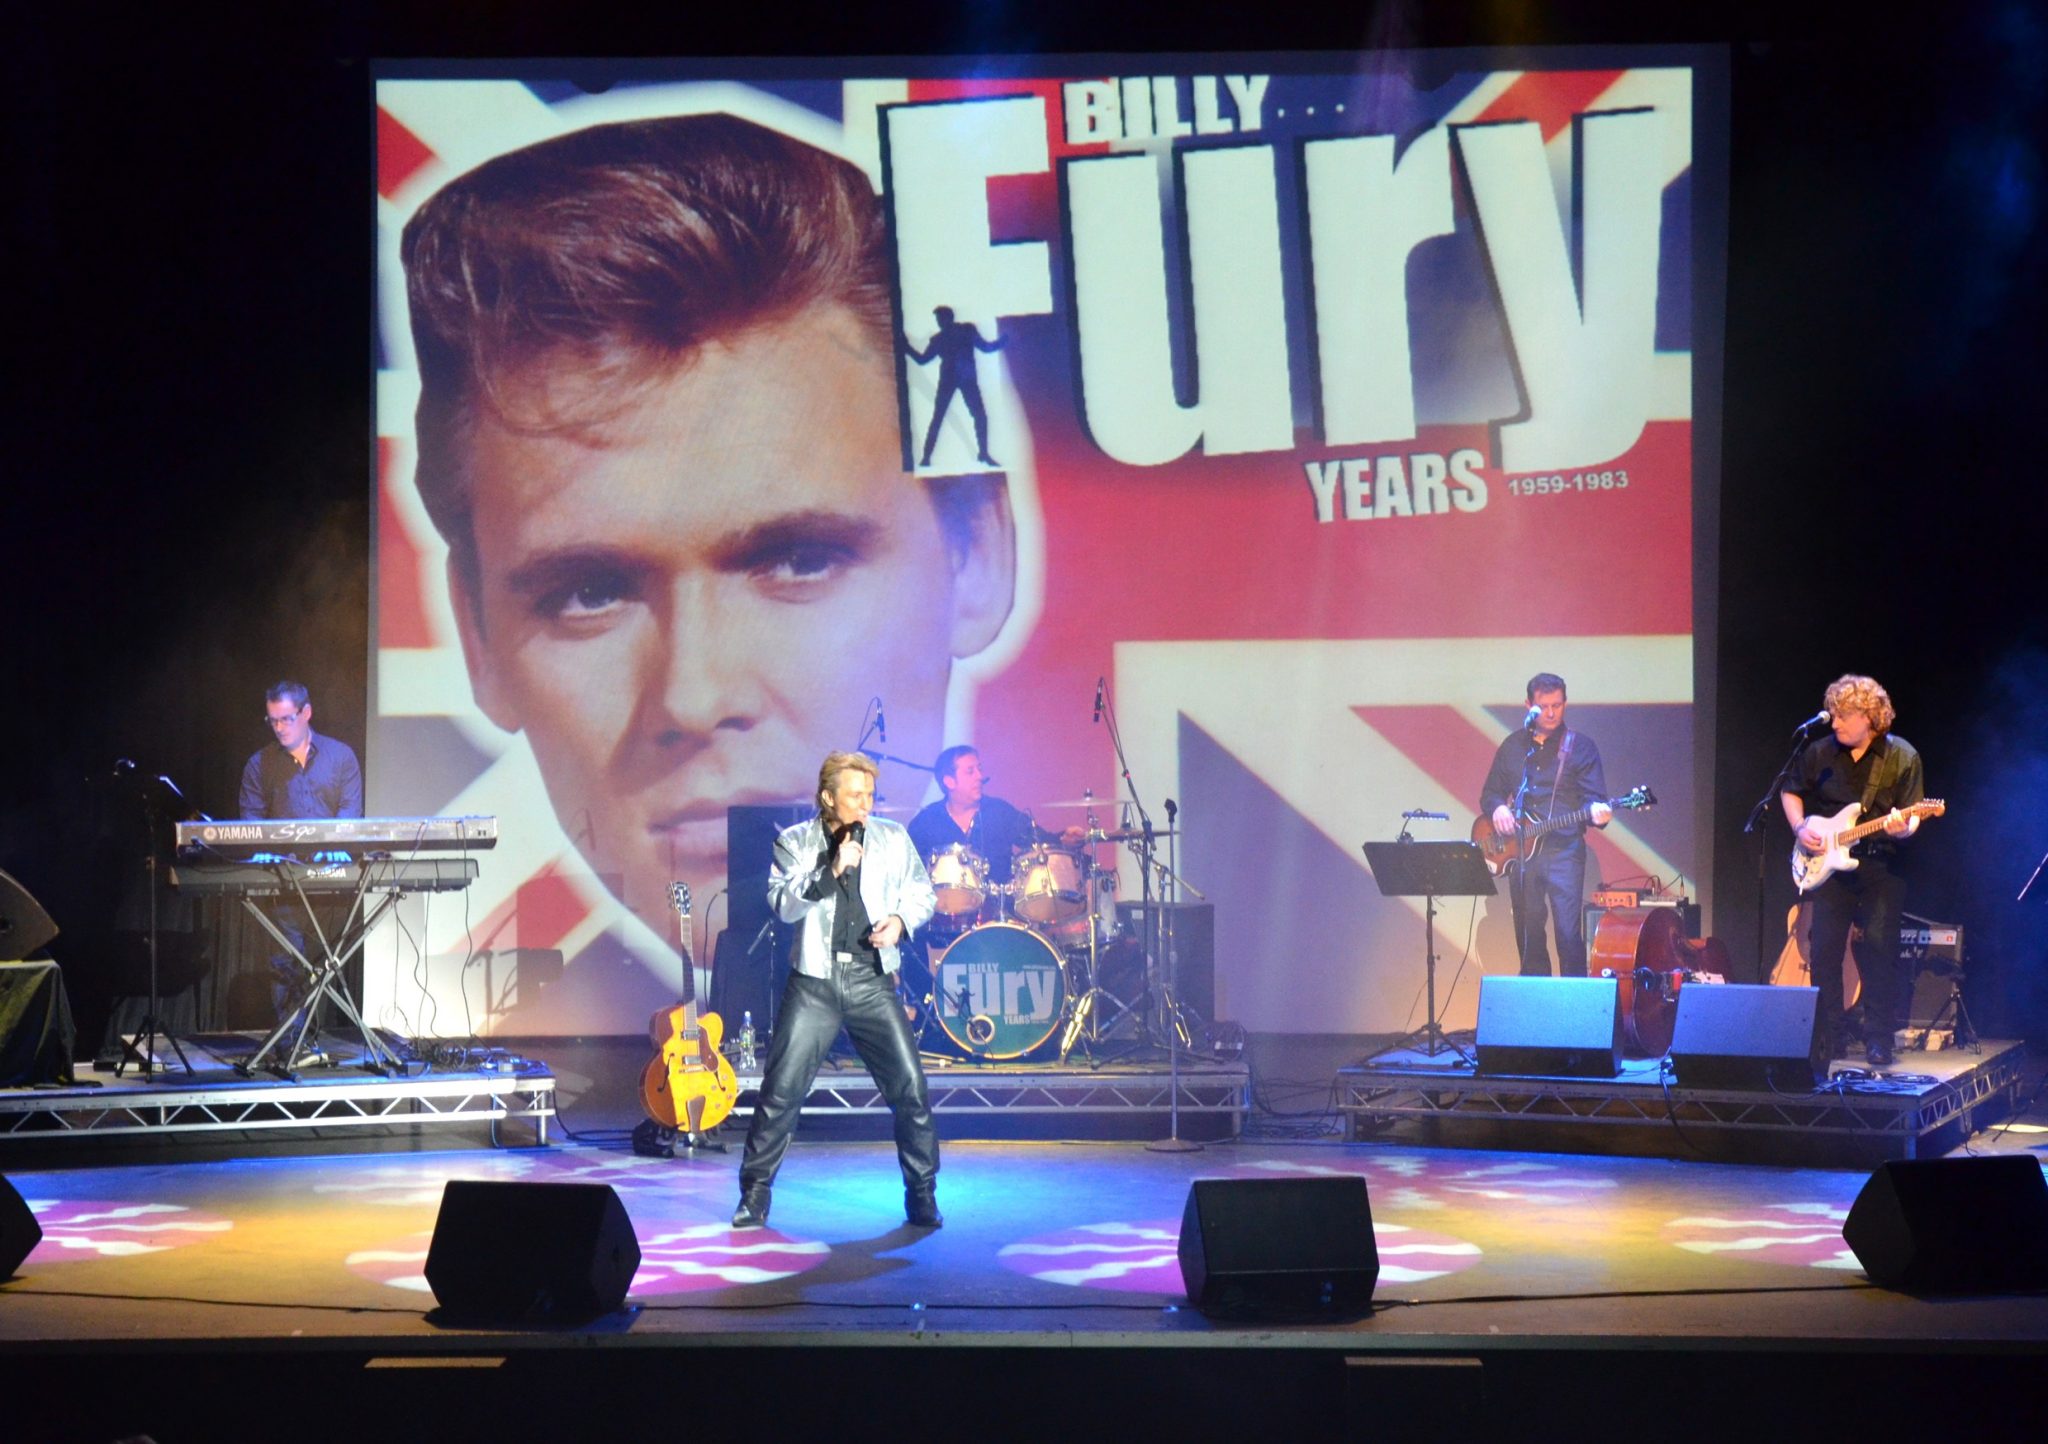 Billy Fury tribute, here in Runcorn 🗓